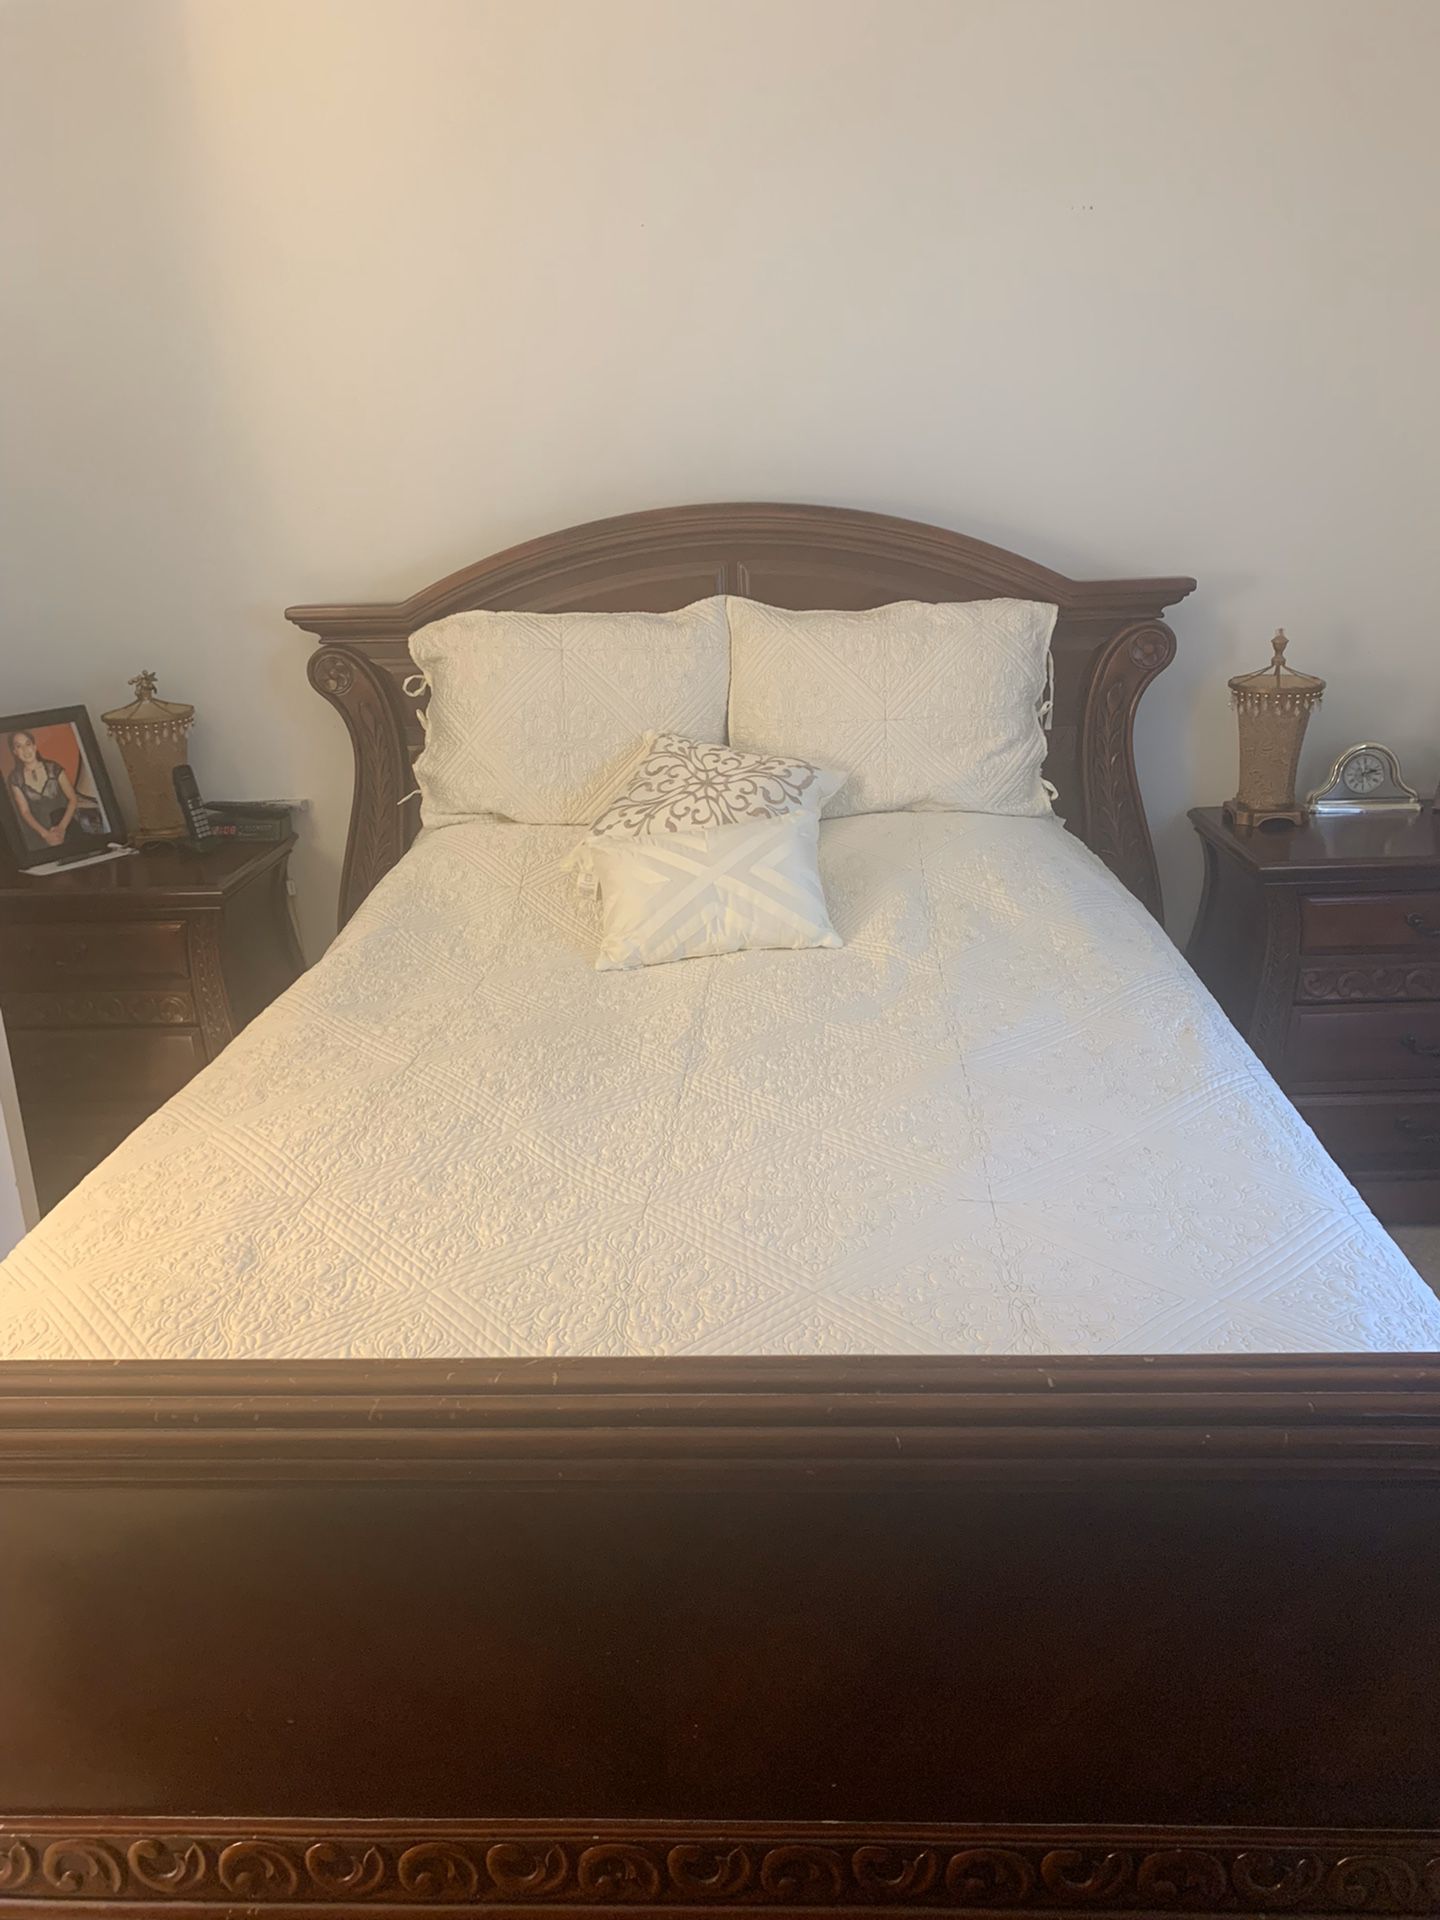 Traditional style queen bedroom set